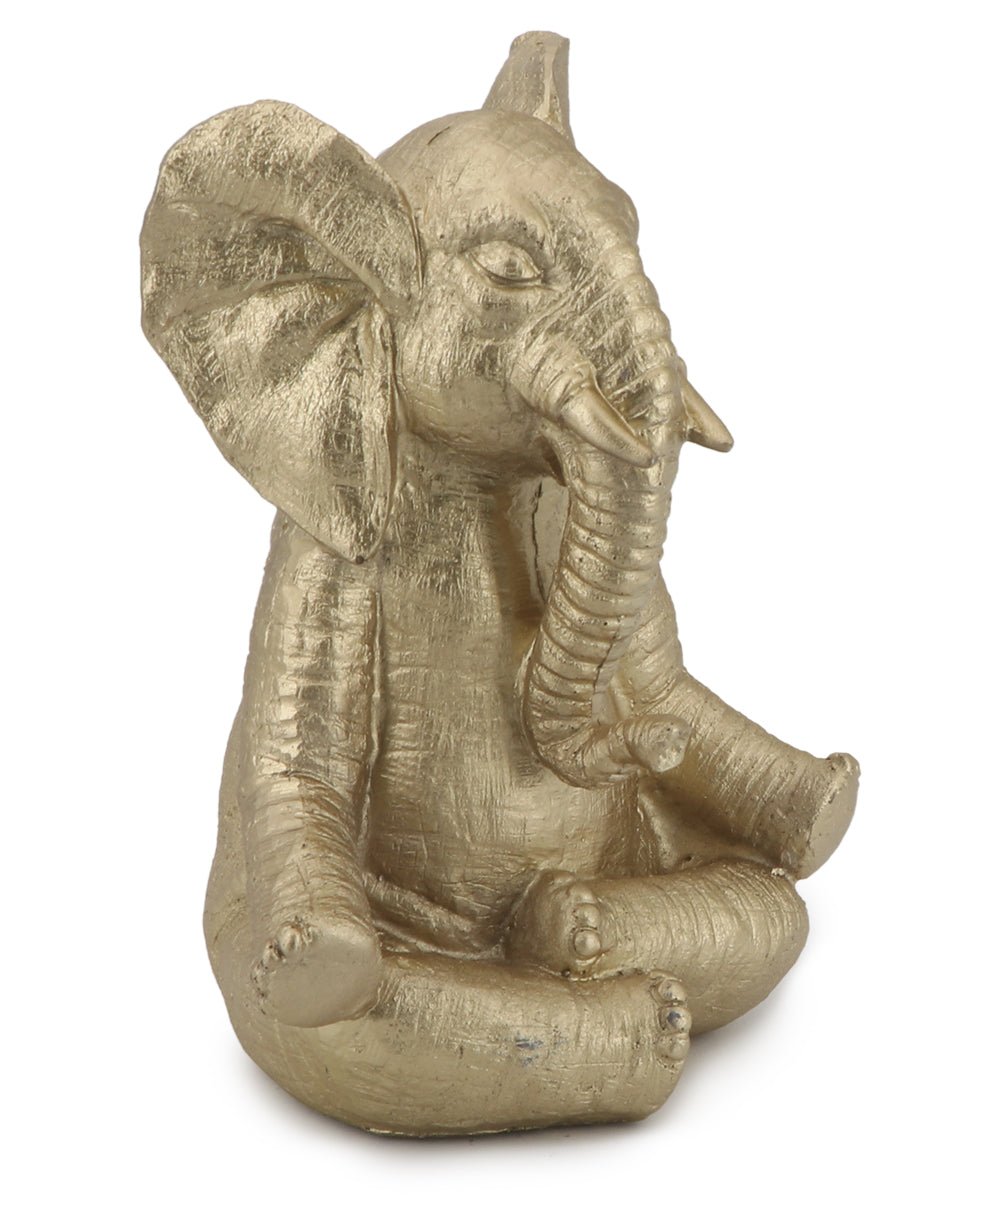 Golden Yoga Elephant Trio: Poses of Devotion - Sculptures & Statues